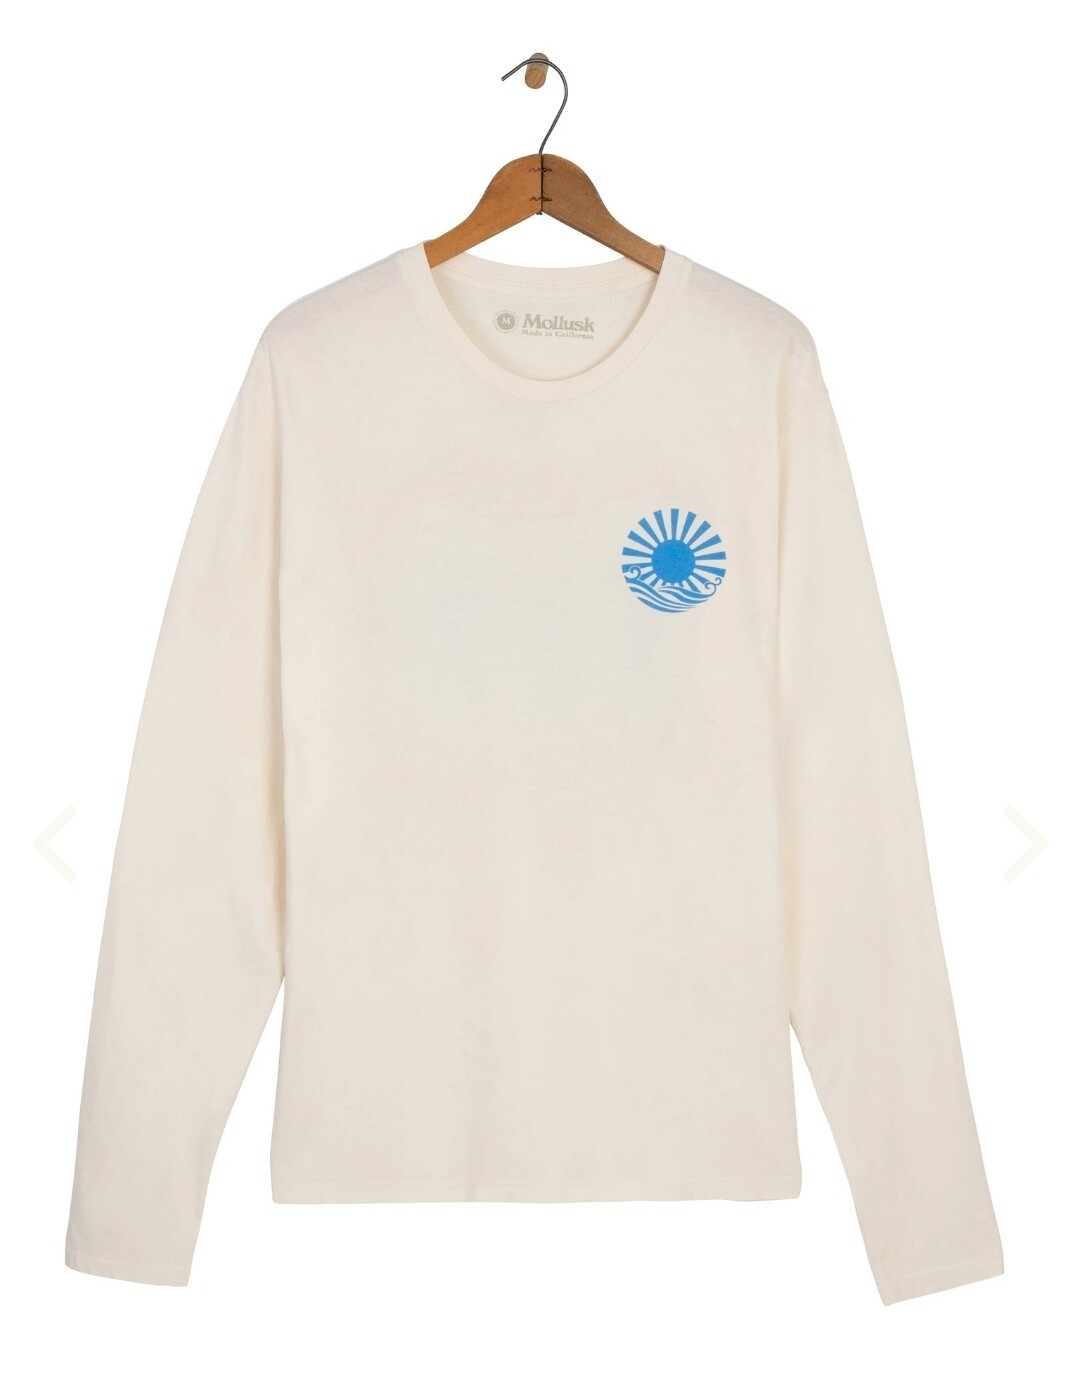 Hempwave Sweatshirt *SALE* (org. $69)